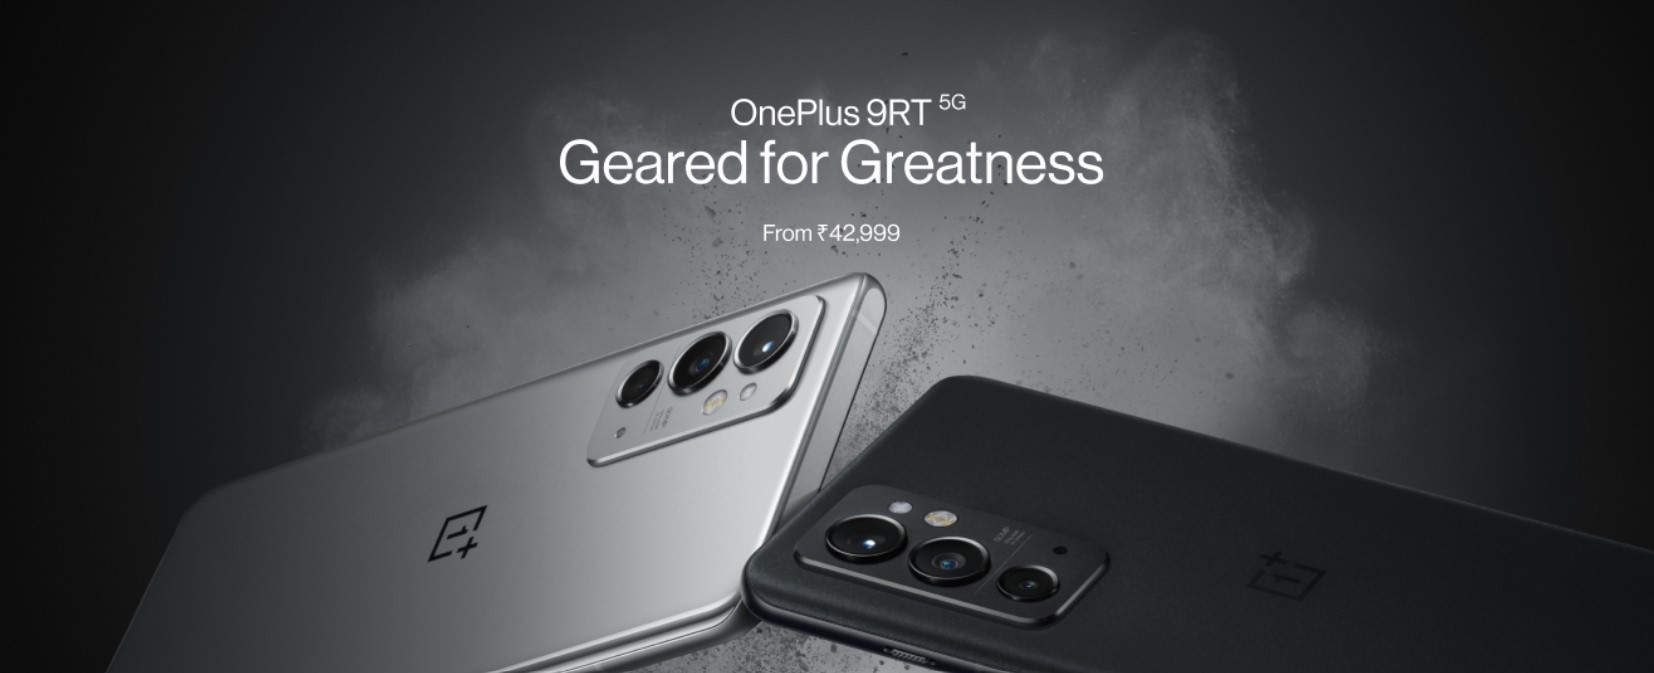 OnePlus 9RT - the best OnePlus phone 2022 under 40000